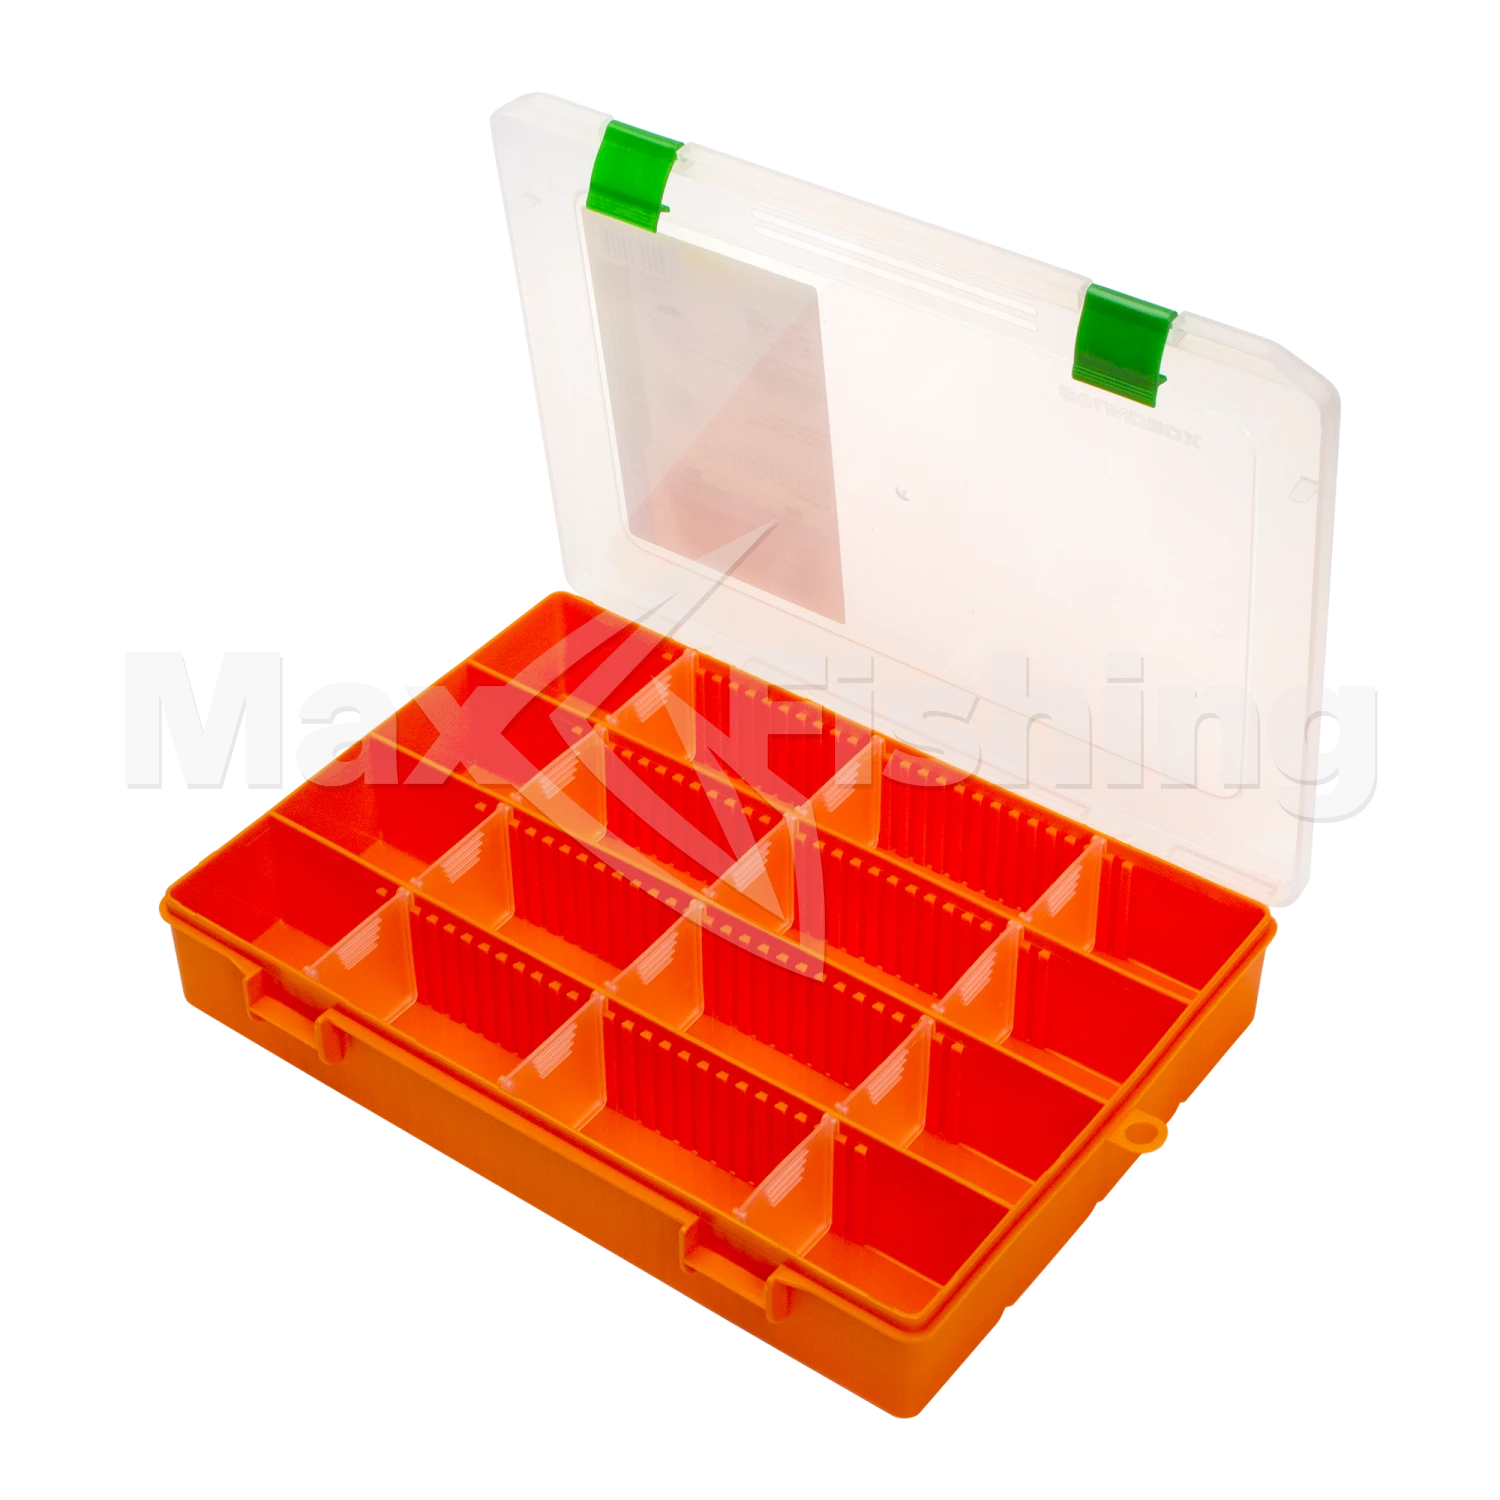 Коробка Fisherbox 310B orange